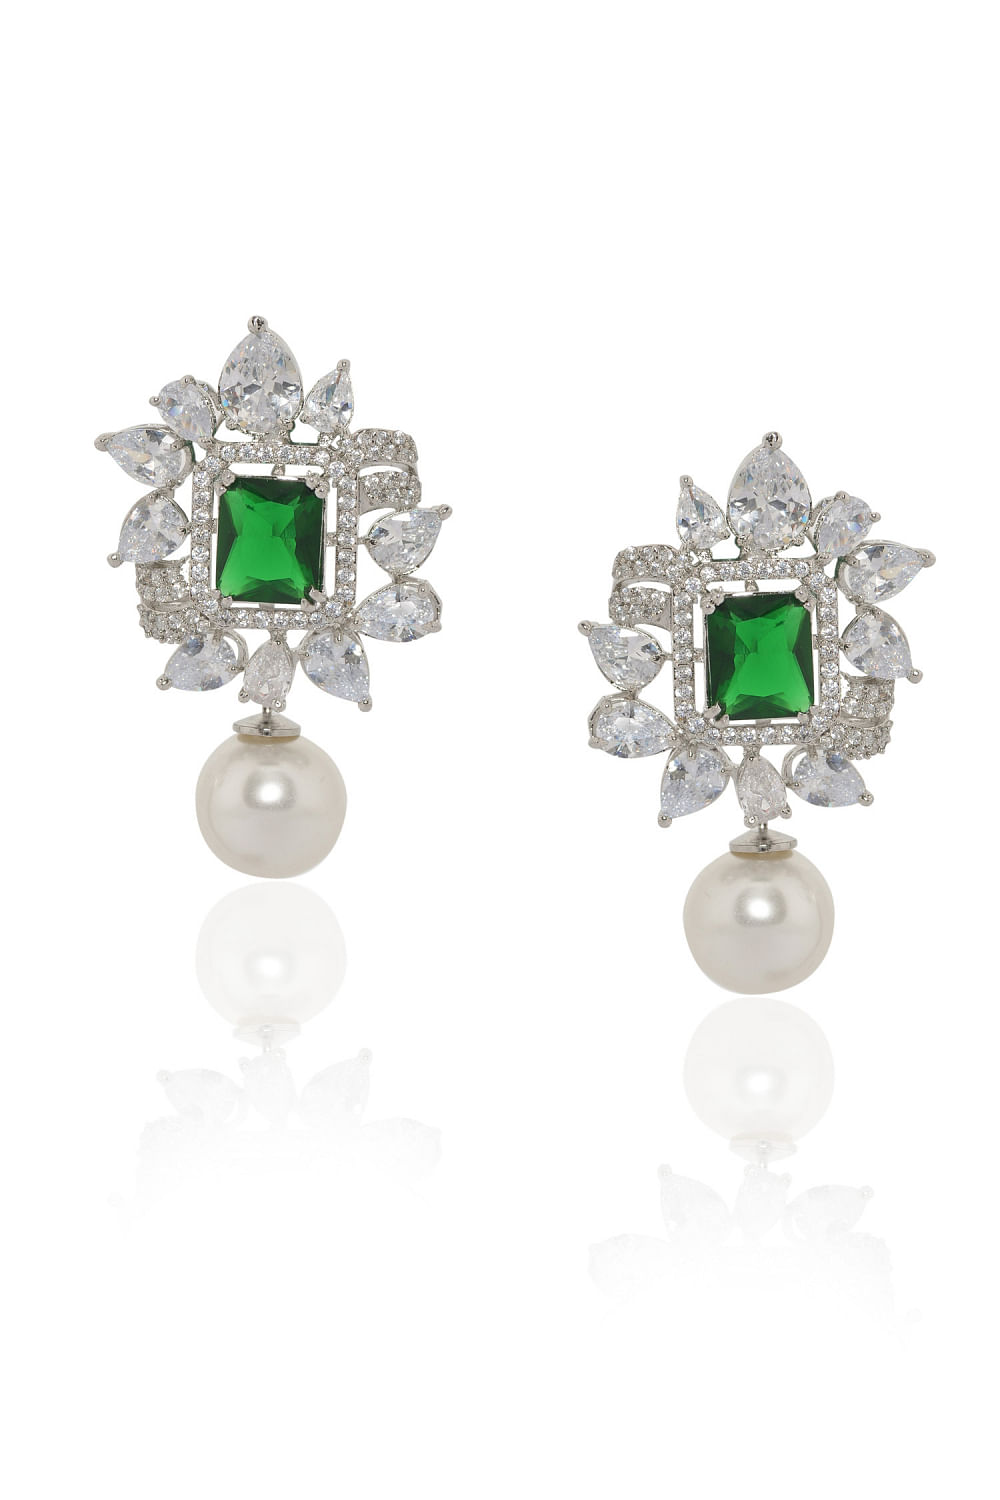 Heavy Material White American diamond earrings at Rs 2500/pair in New Delhi